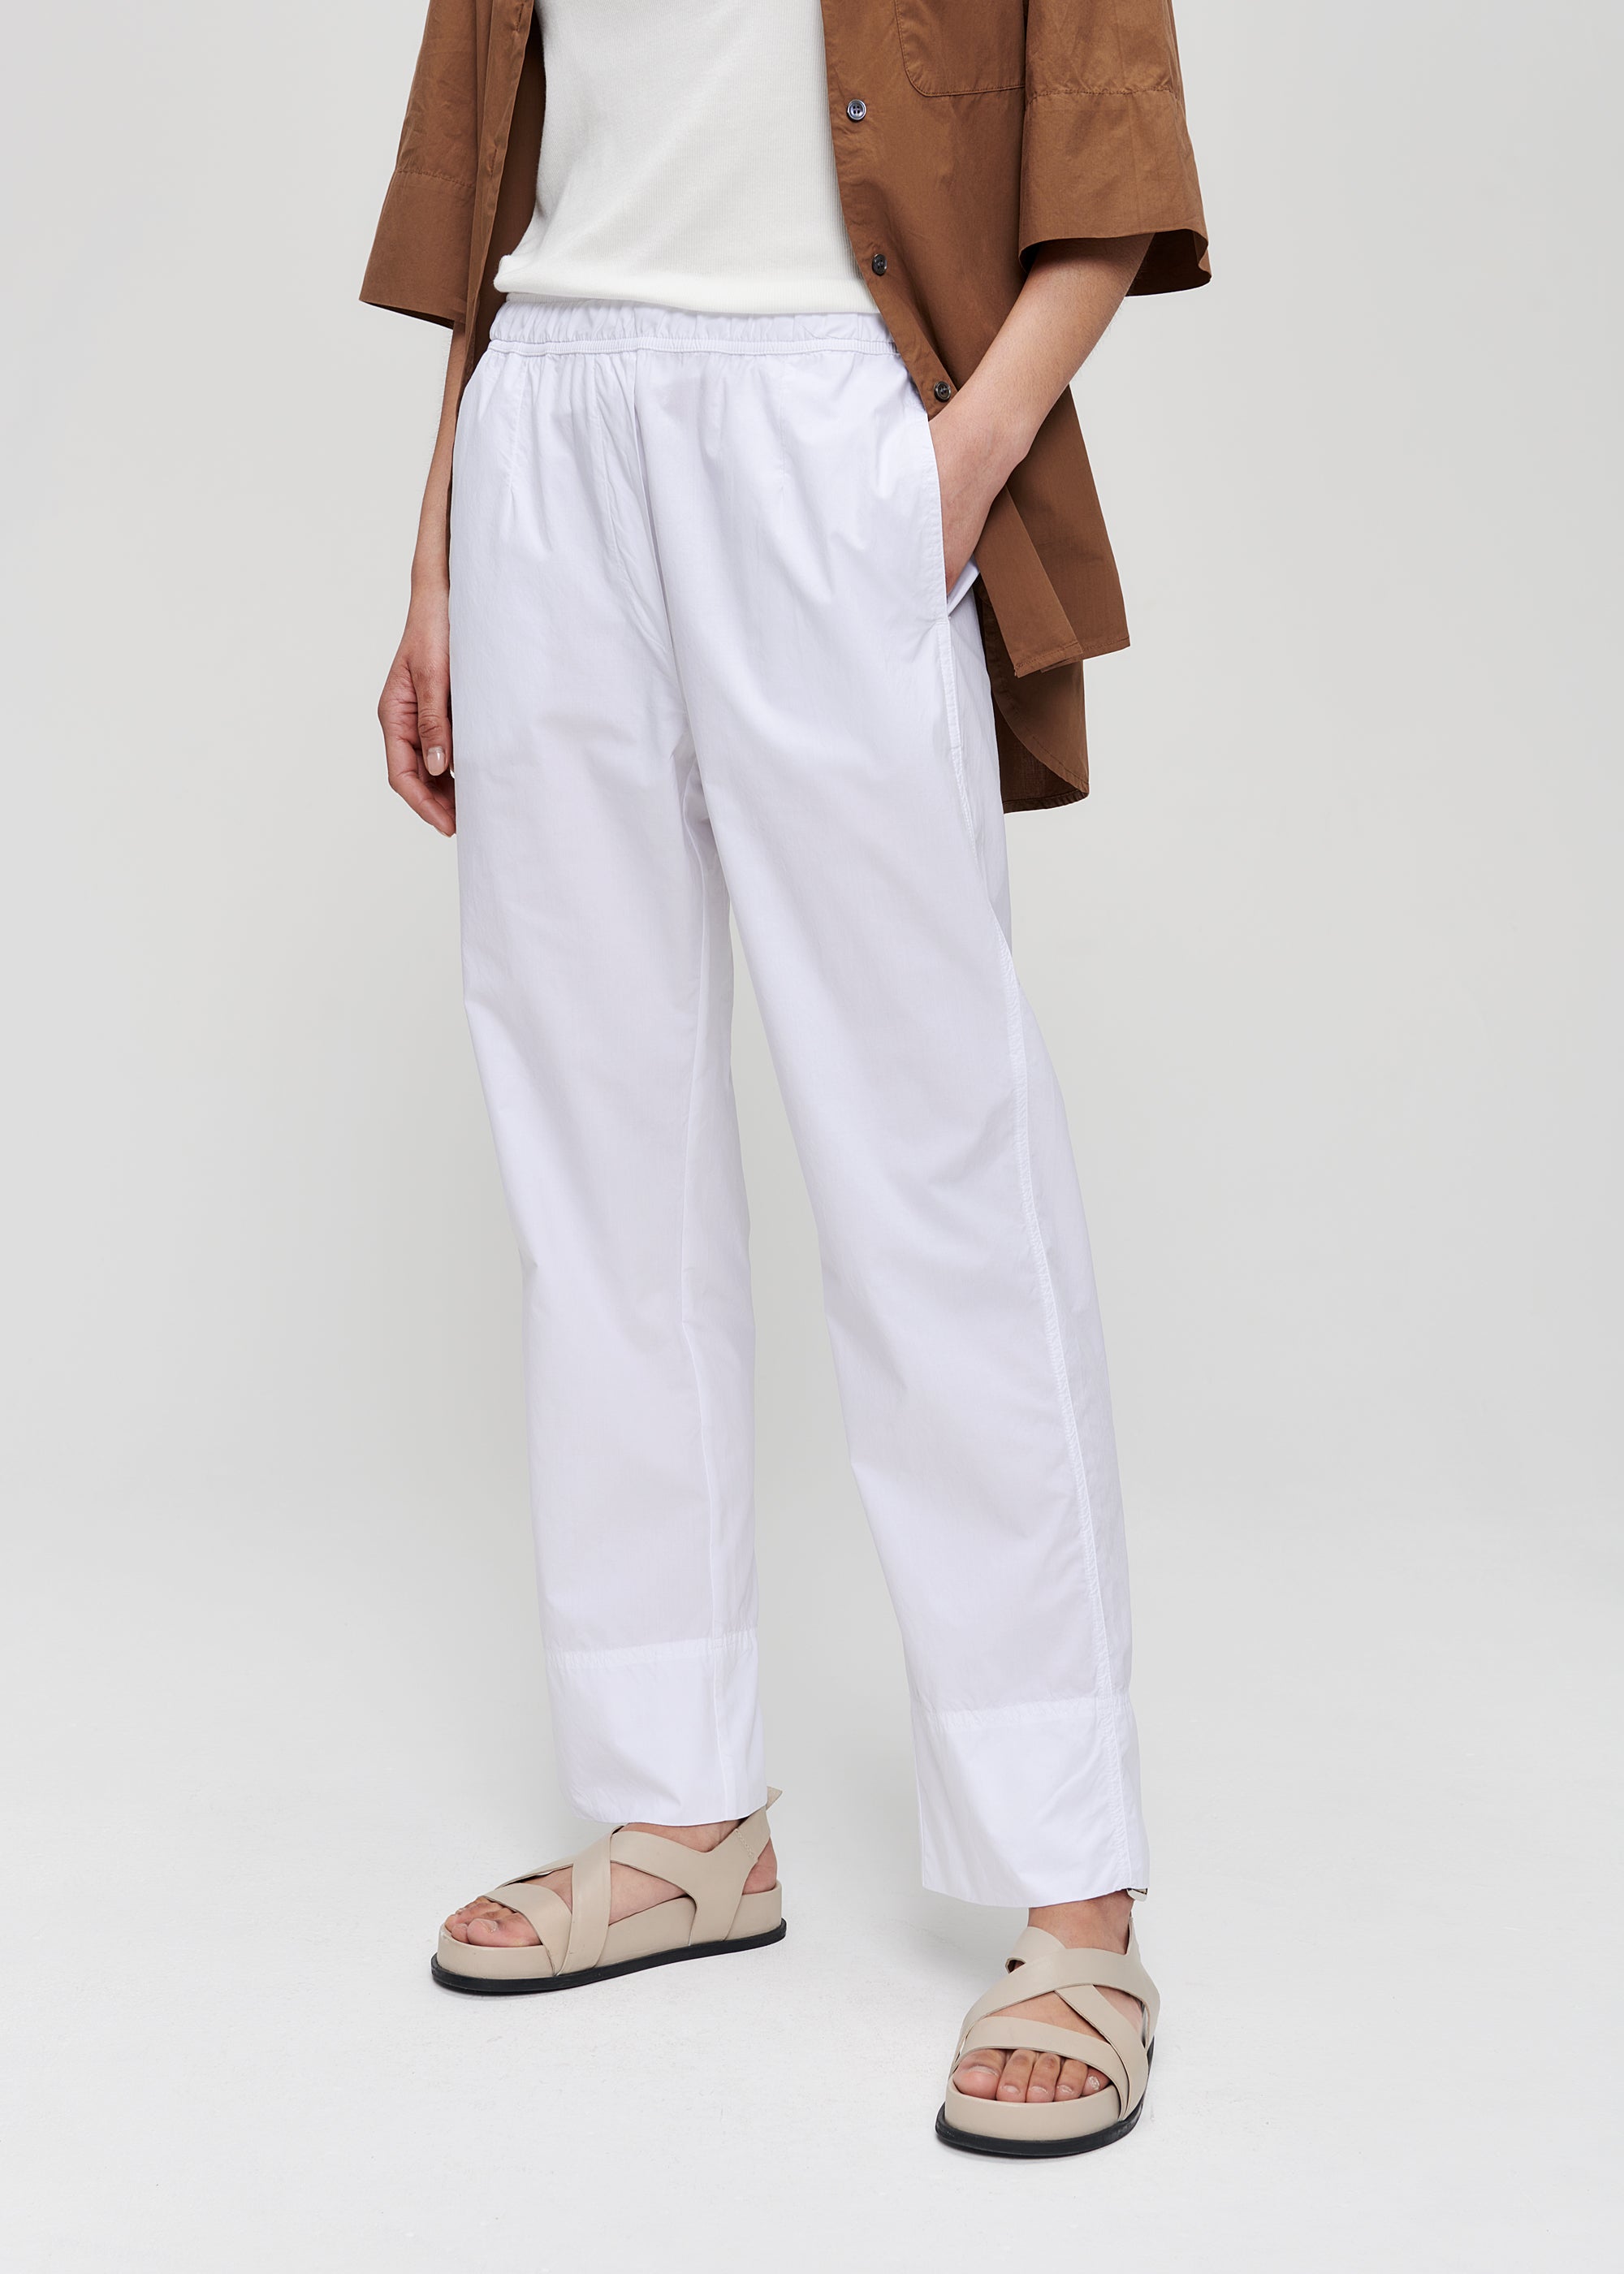 Buy El Nido Cotton Poplin Pants and Pants, Skirts & Shorts - Shop Natori  Online